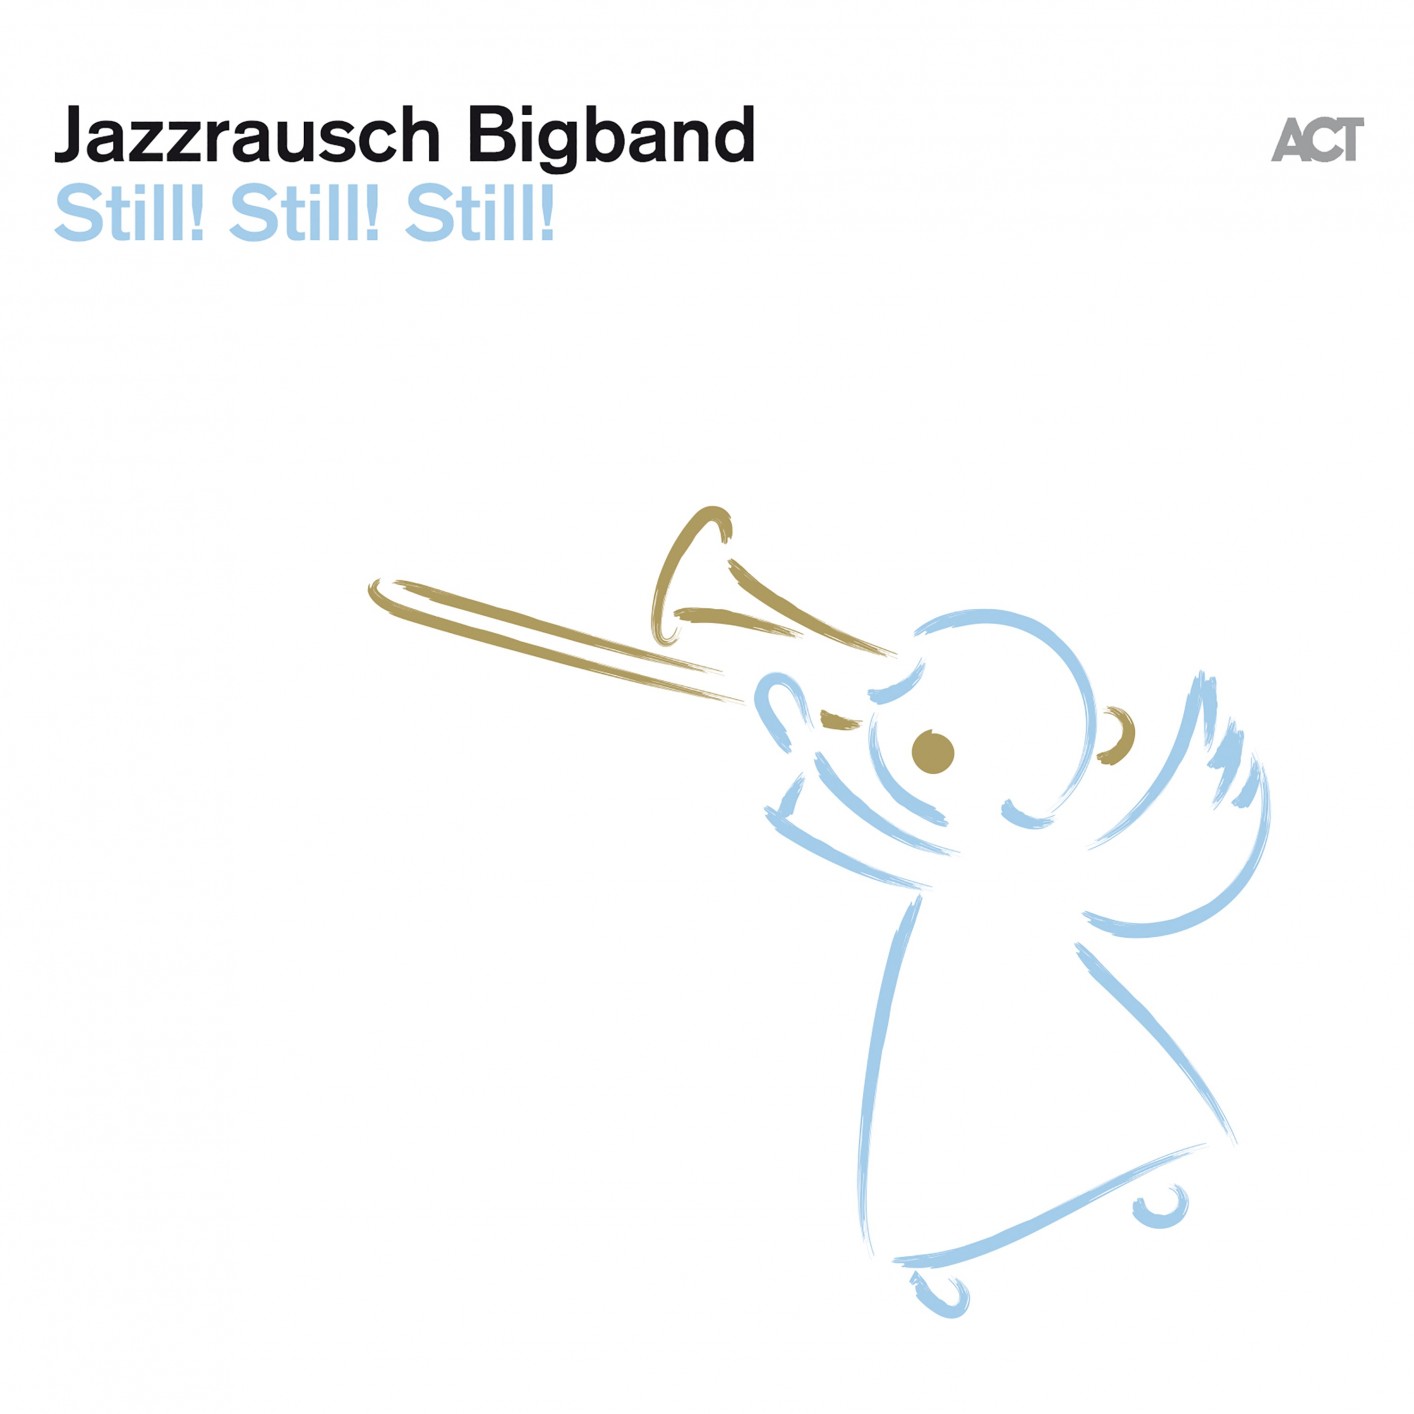 Jazzrausch Bigband - Still Still! Still! (2019) [FLAC 24bit/48kHz]